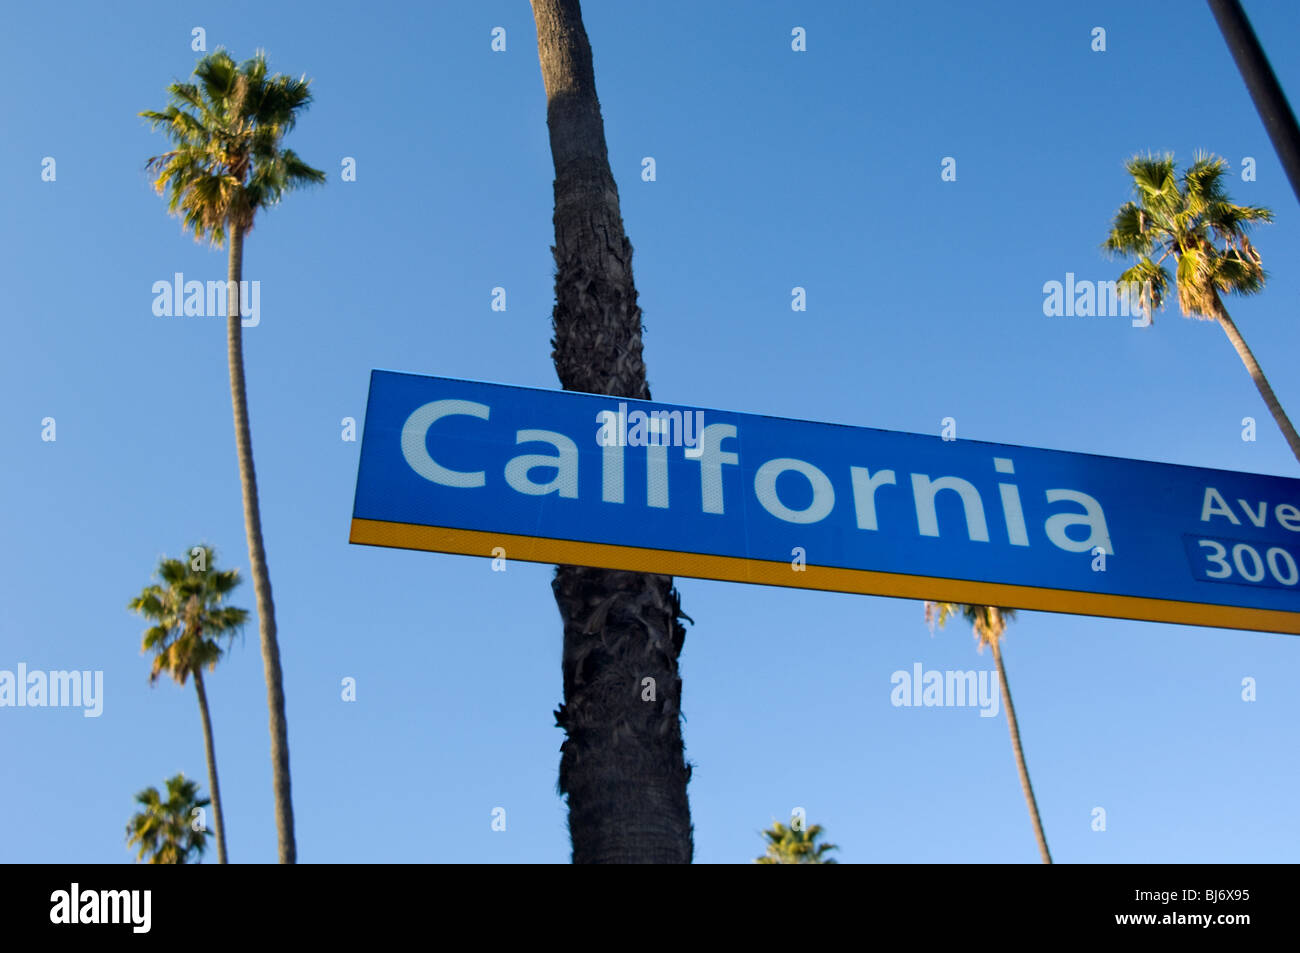 California Ave. strada segno in Santa Monica, CA Foto Stock